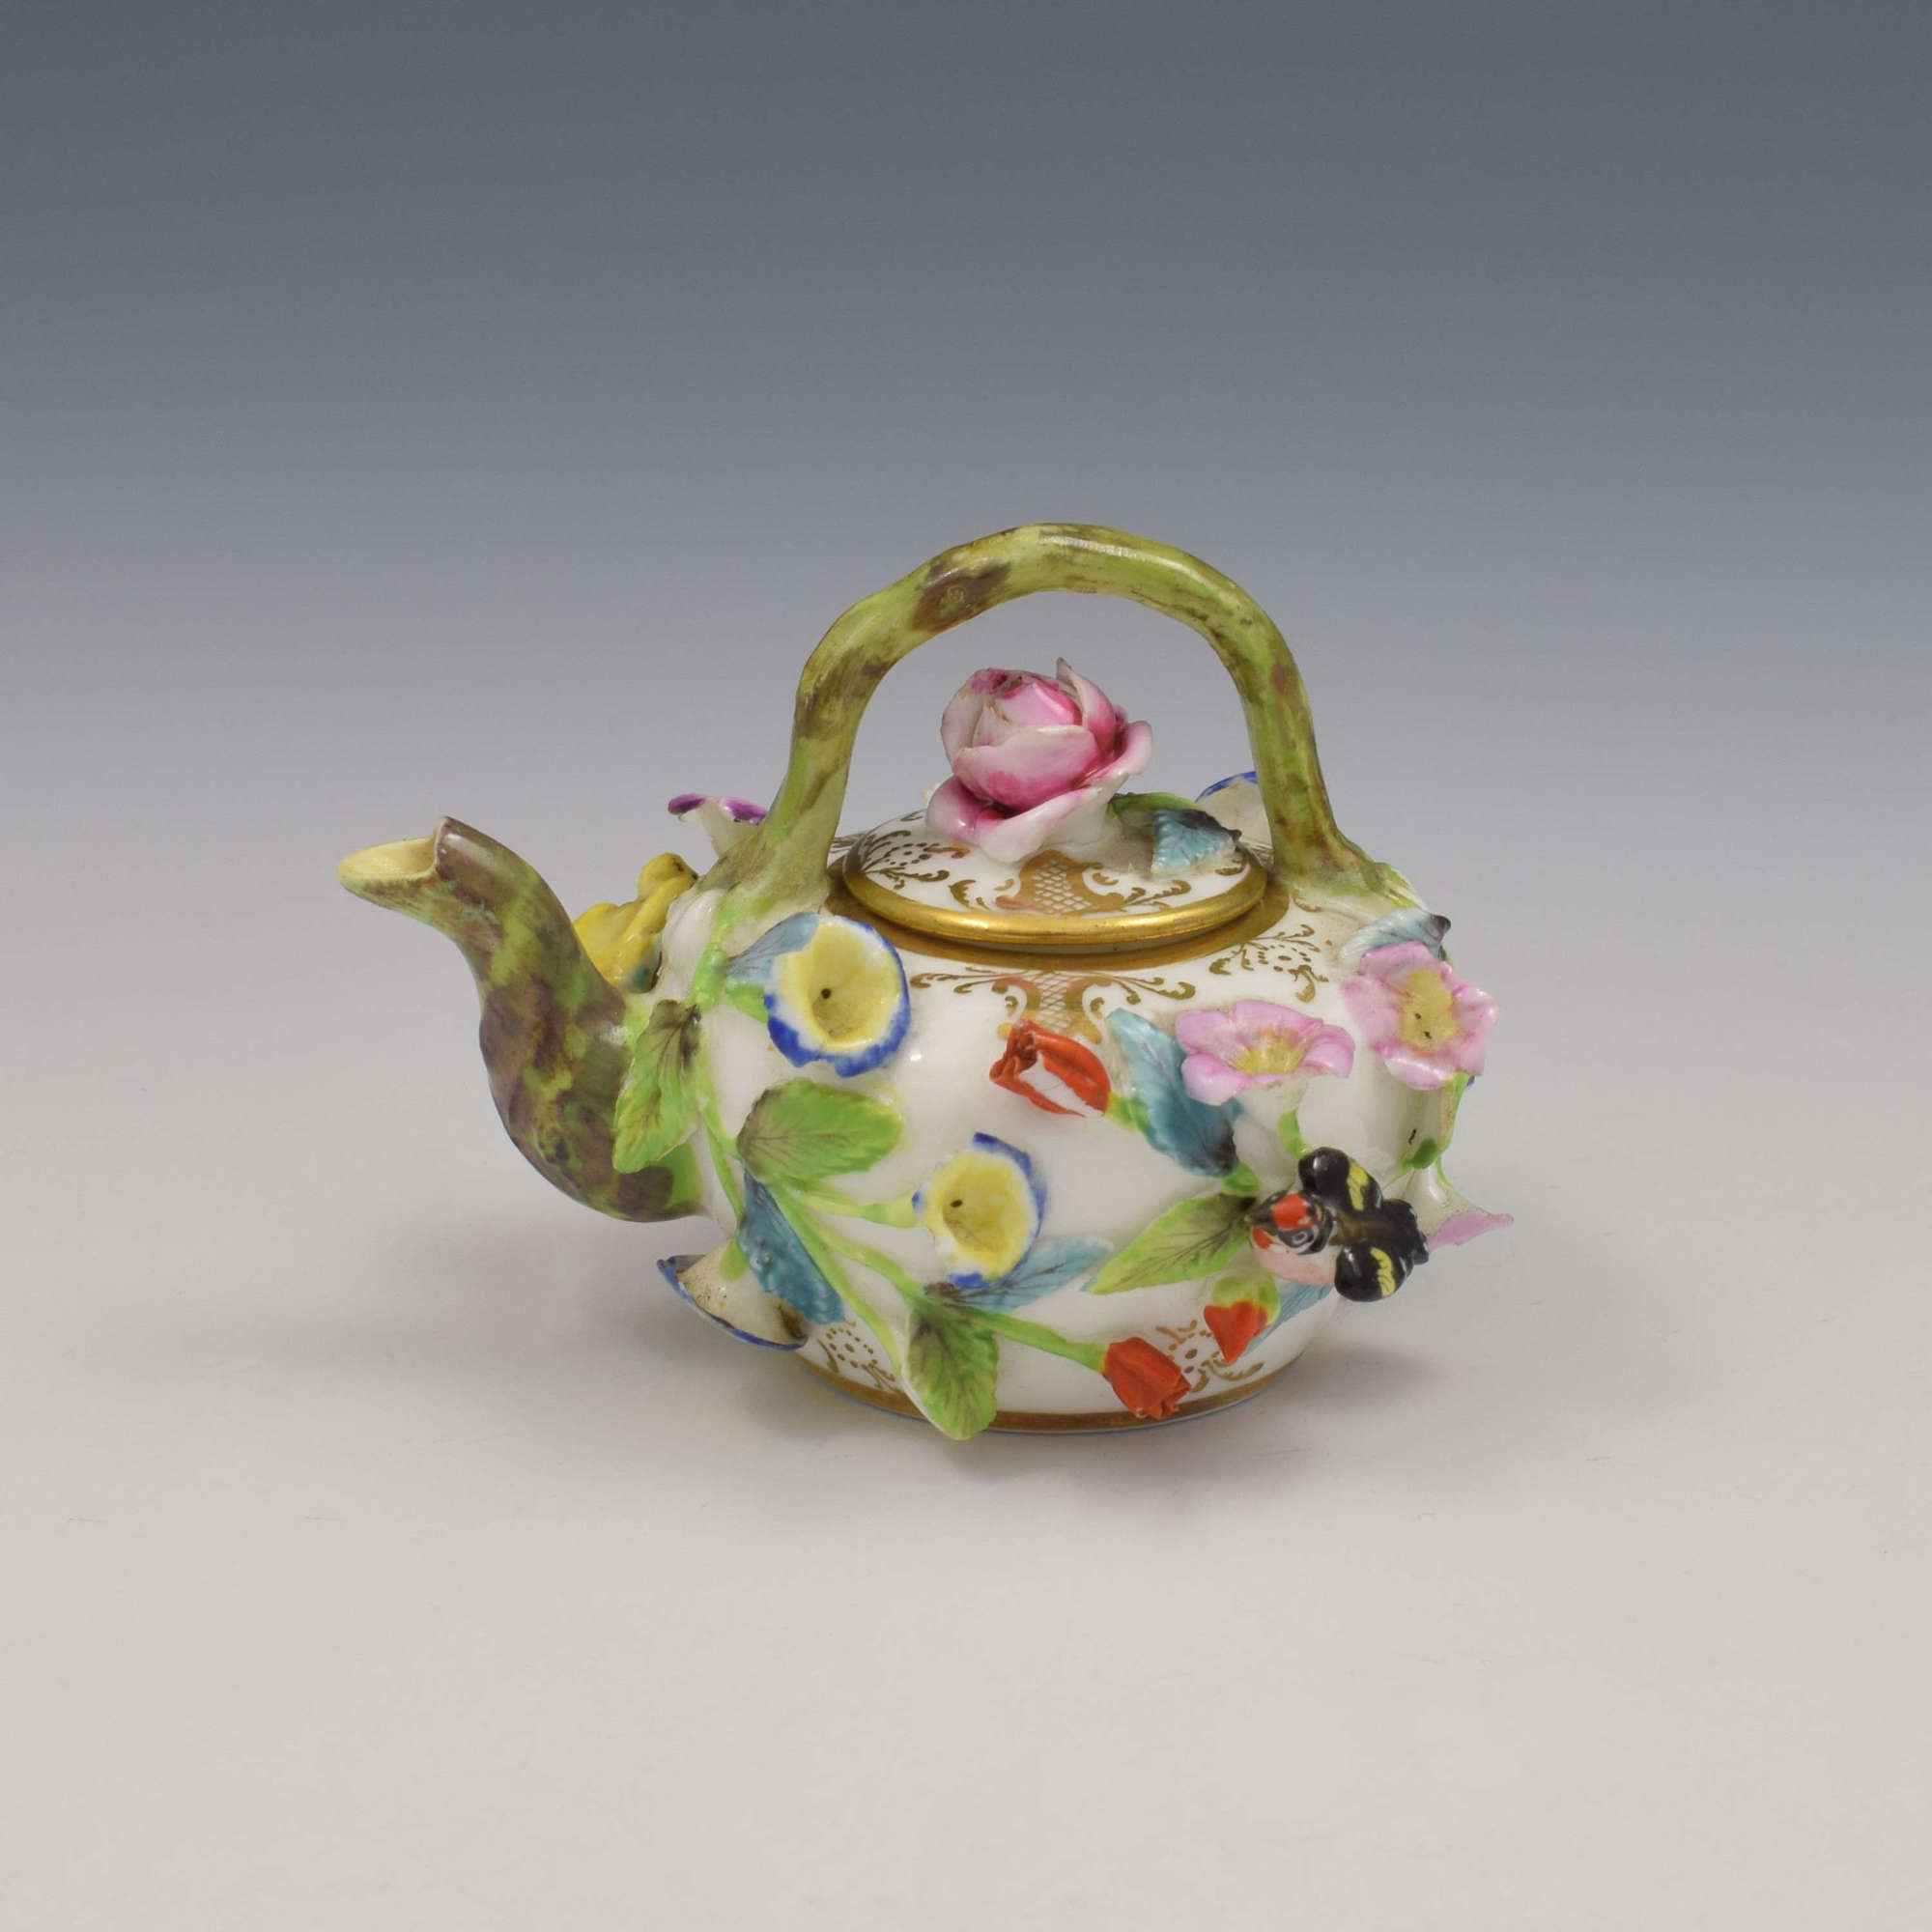 Rare Spode Porcelain Miniature Toy Flower Encrusted Tea Kettle c.1825